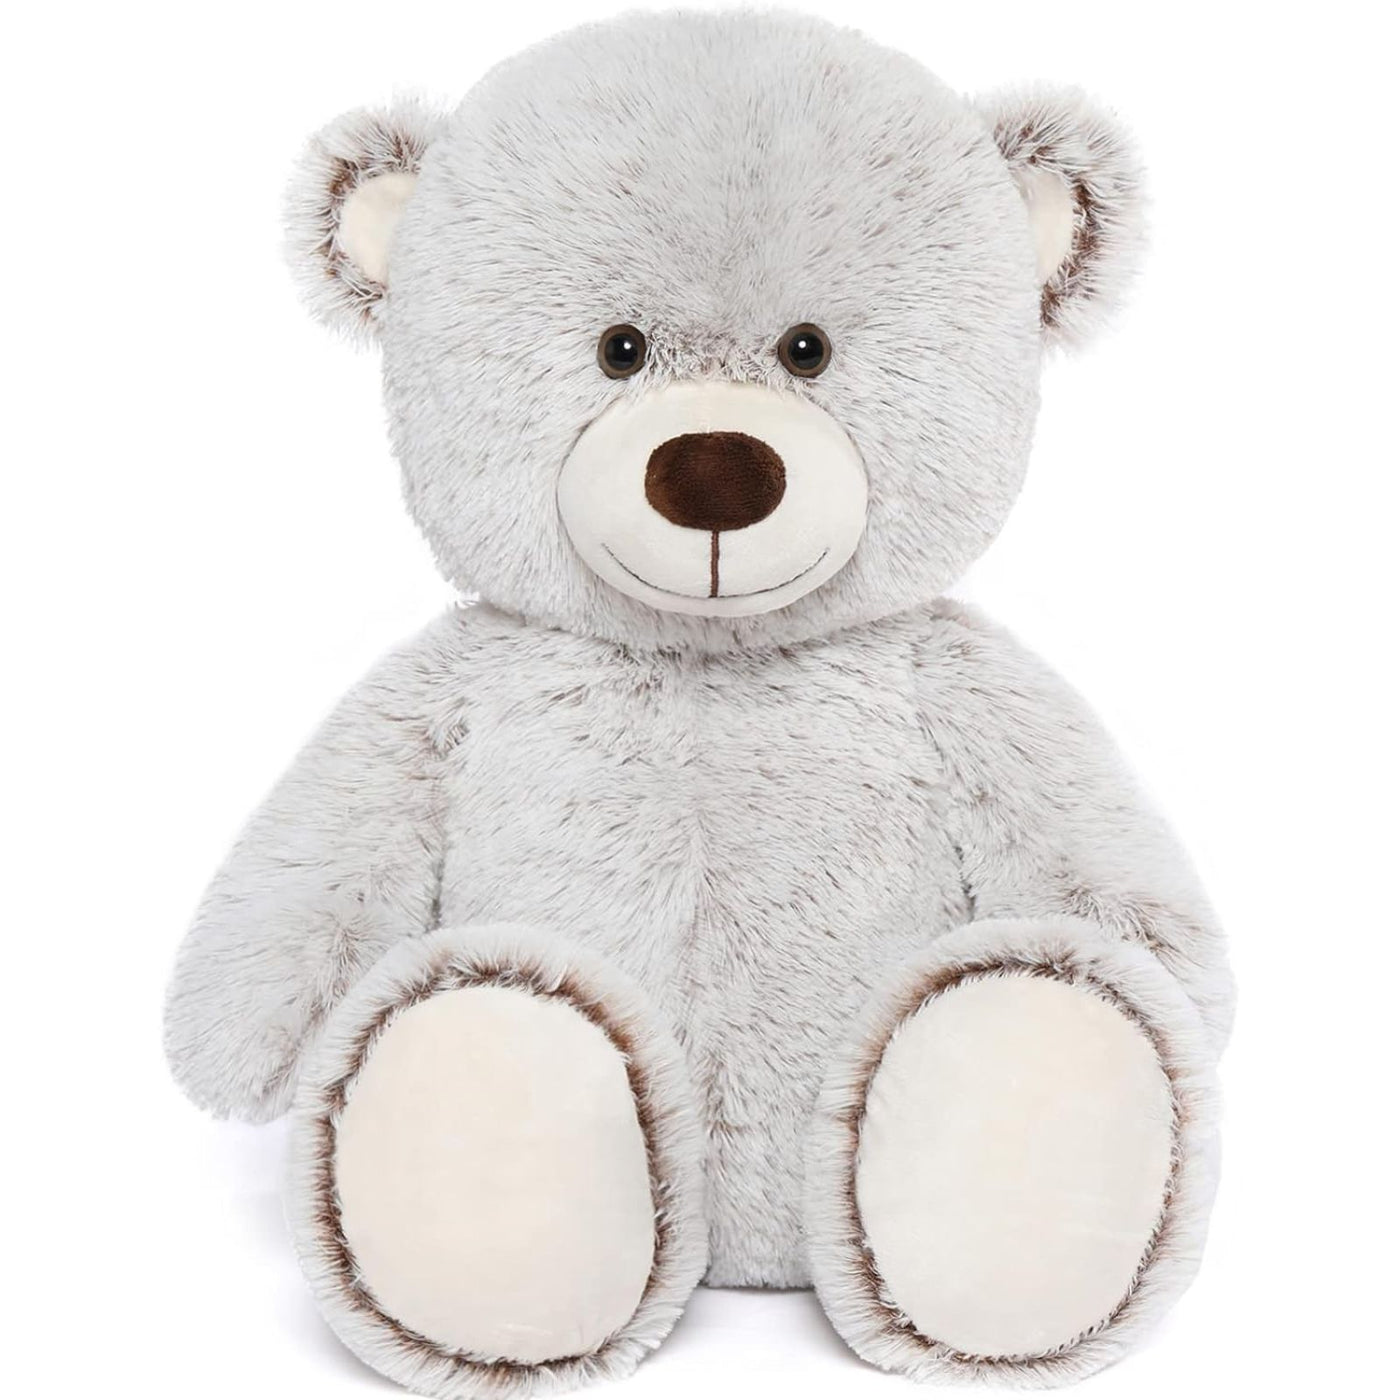 Chic Teddy Bear Plush Toy, 17.5 Inches